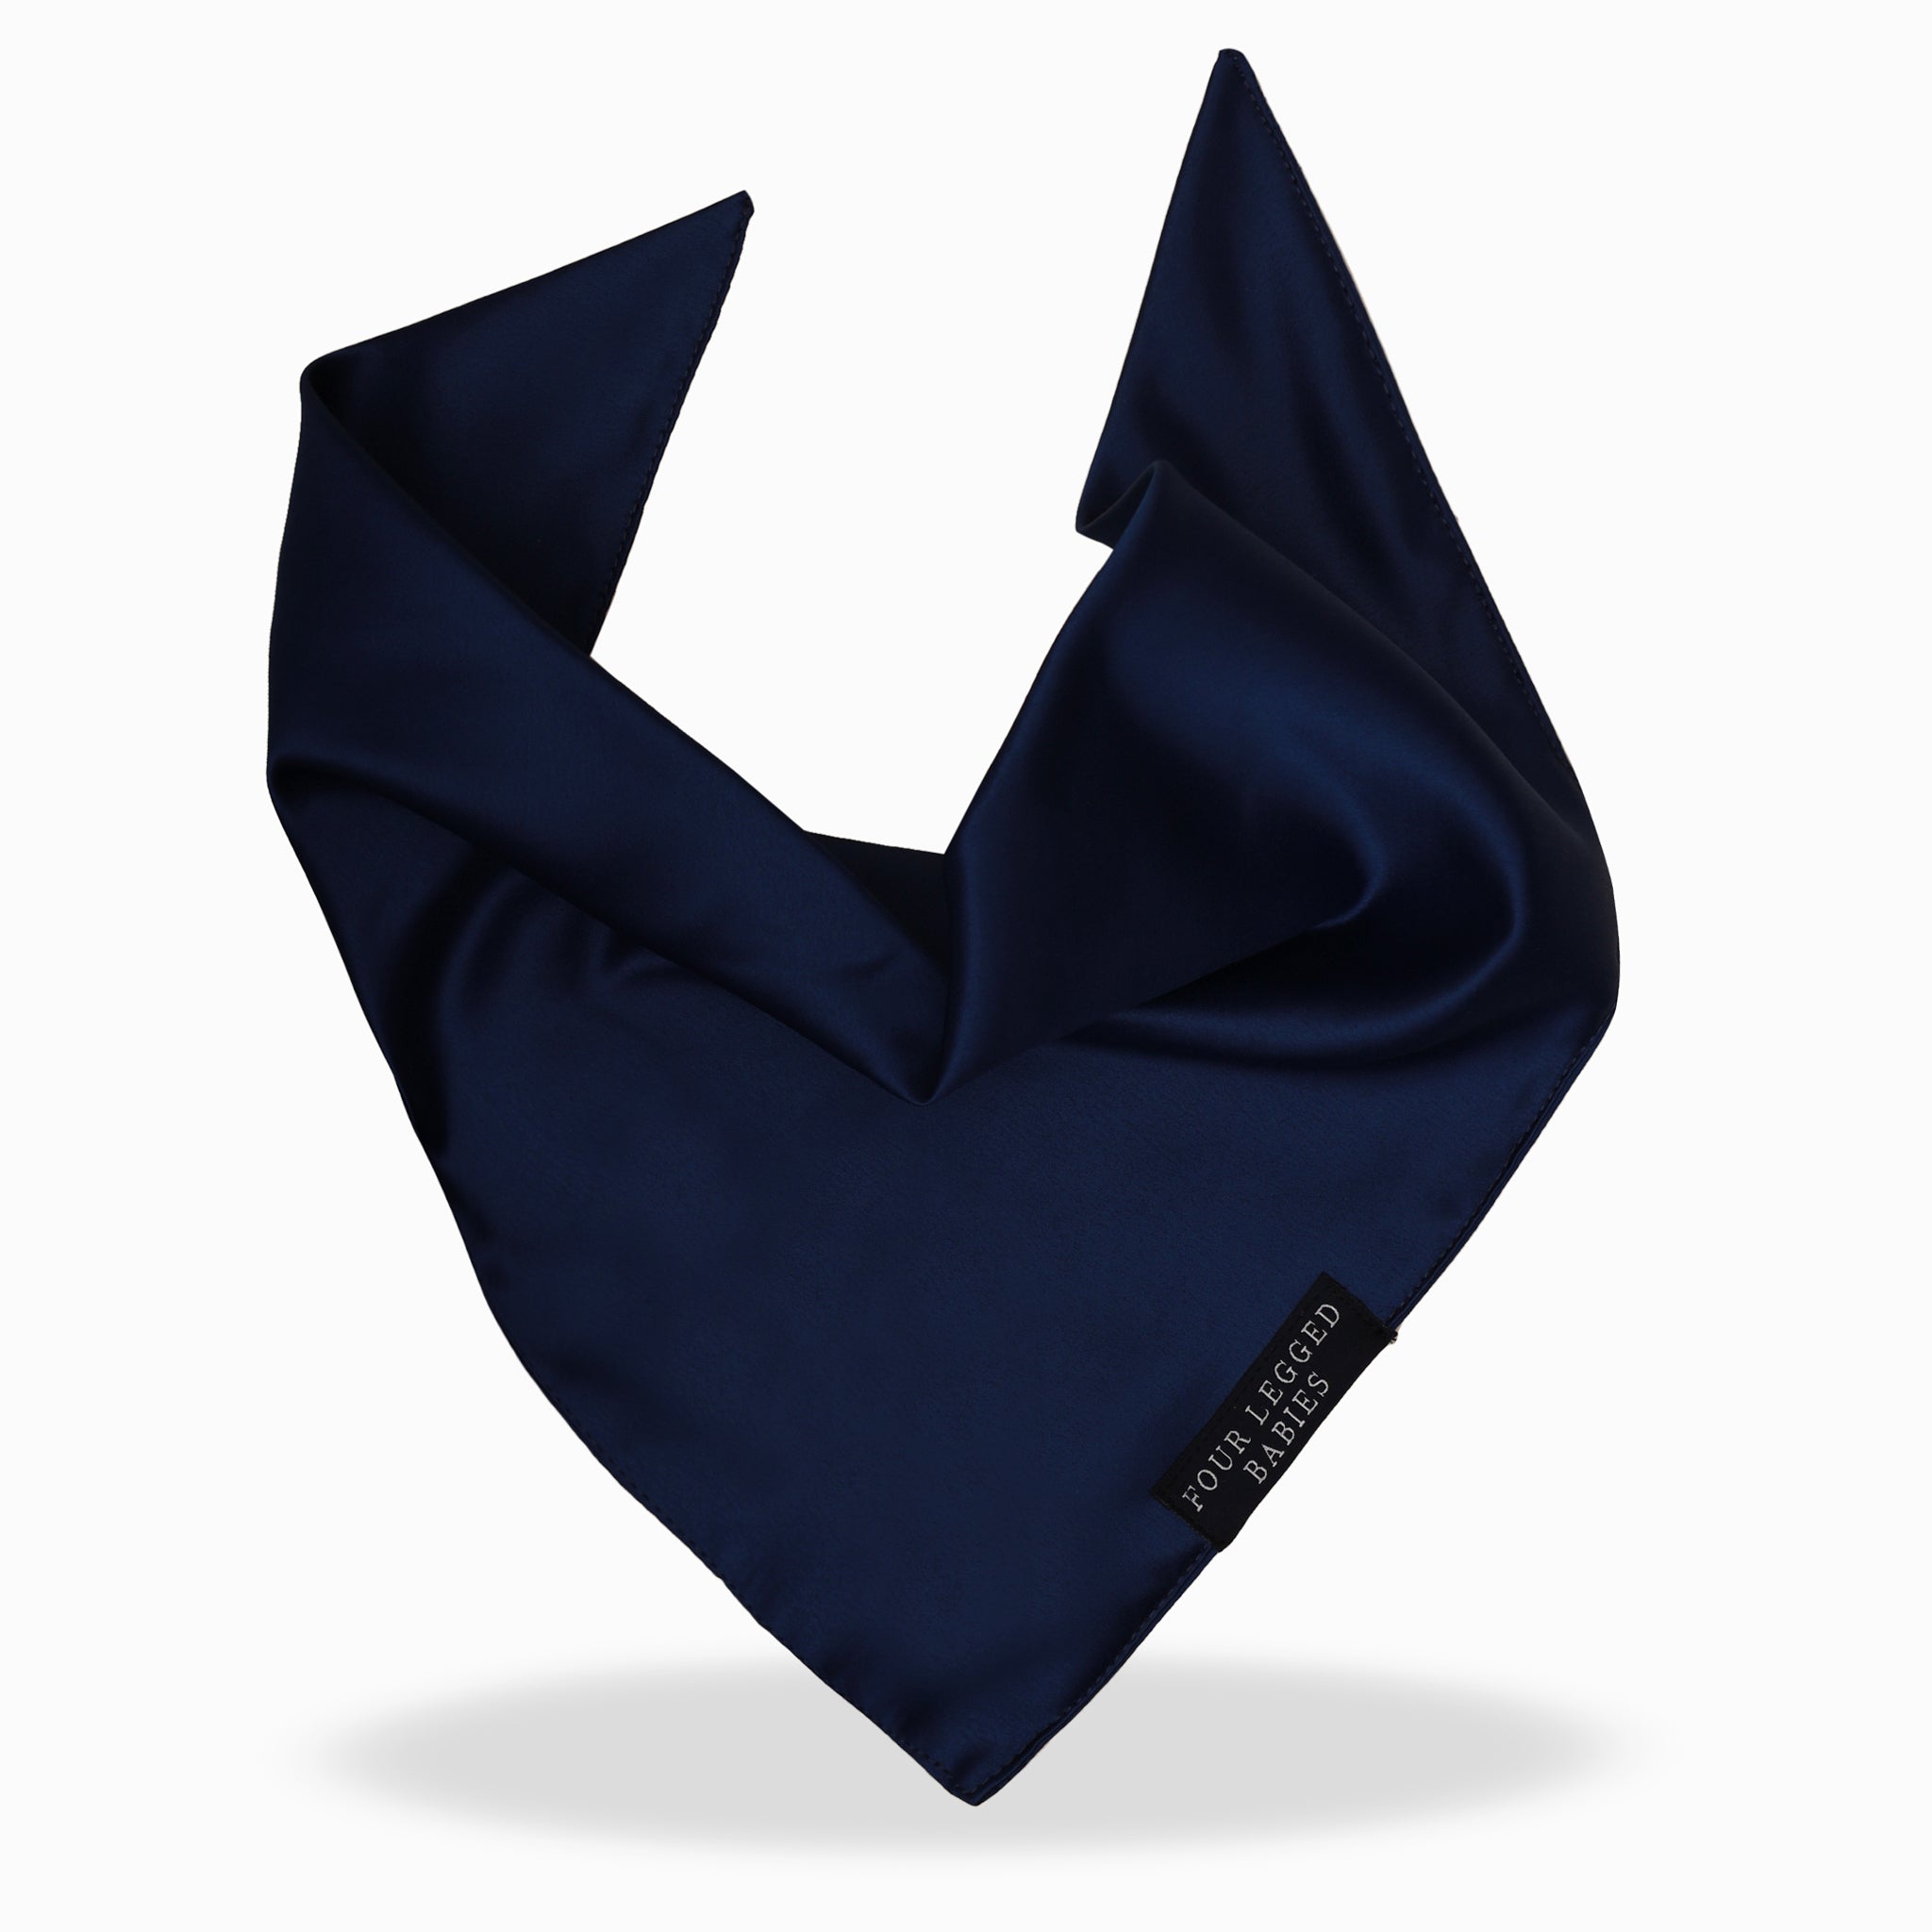 Luxury Navy blue satin bandana